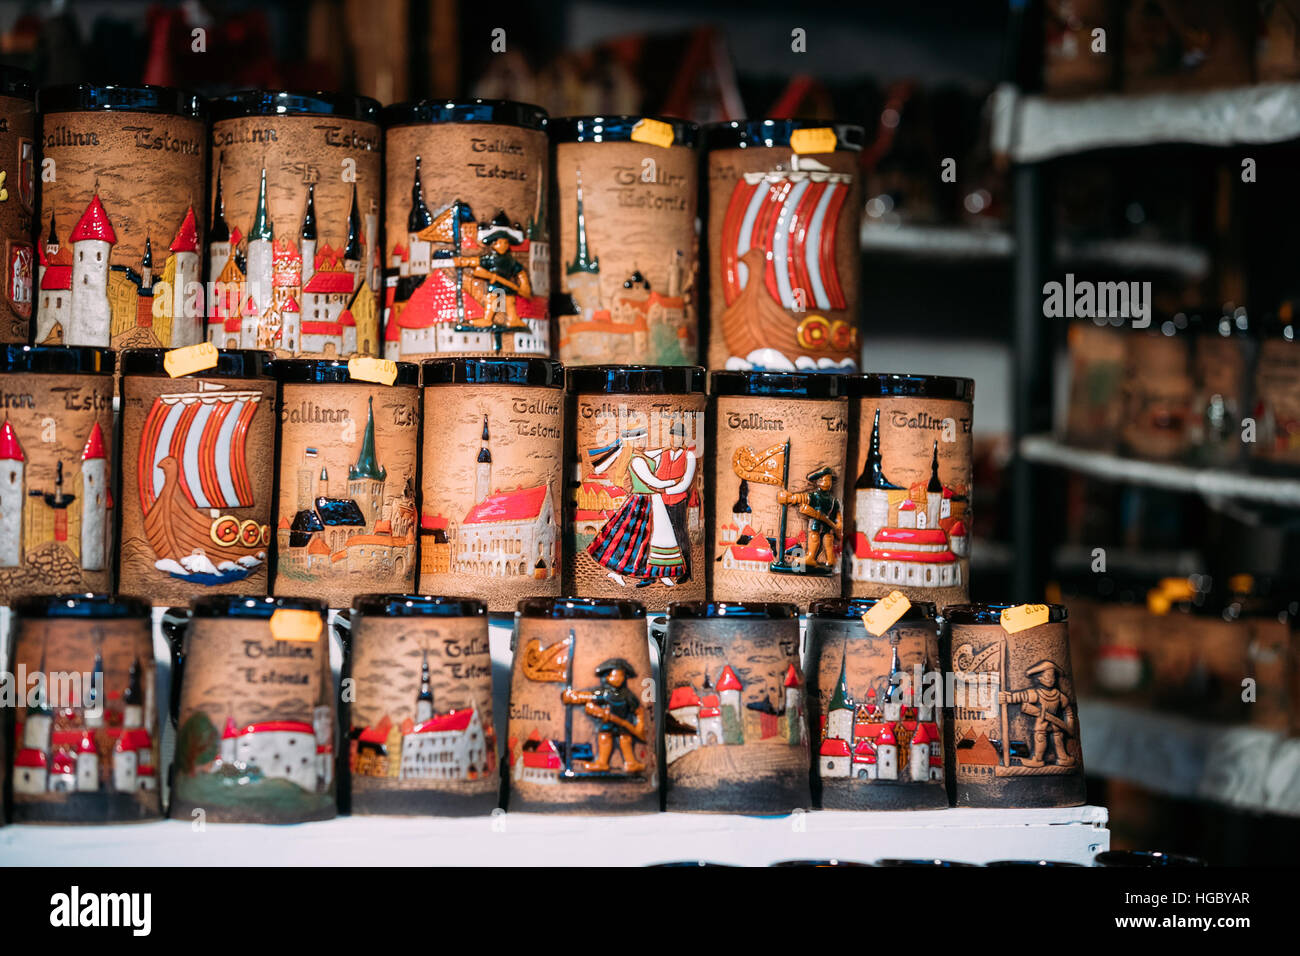 Tallinn, Estonia - December 2, 2016: Souvenir Beer Cup On Store Shelves. Various Traditional Earthenware Pottery Tableware Cups At Folk Market. Souven Stock Photo